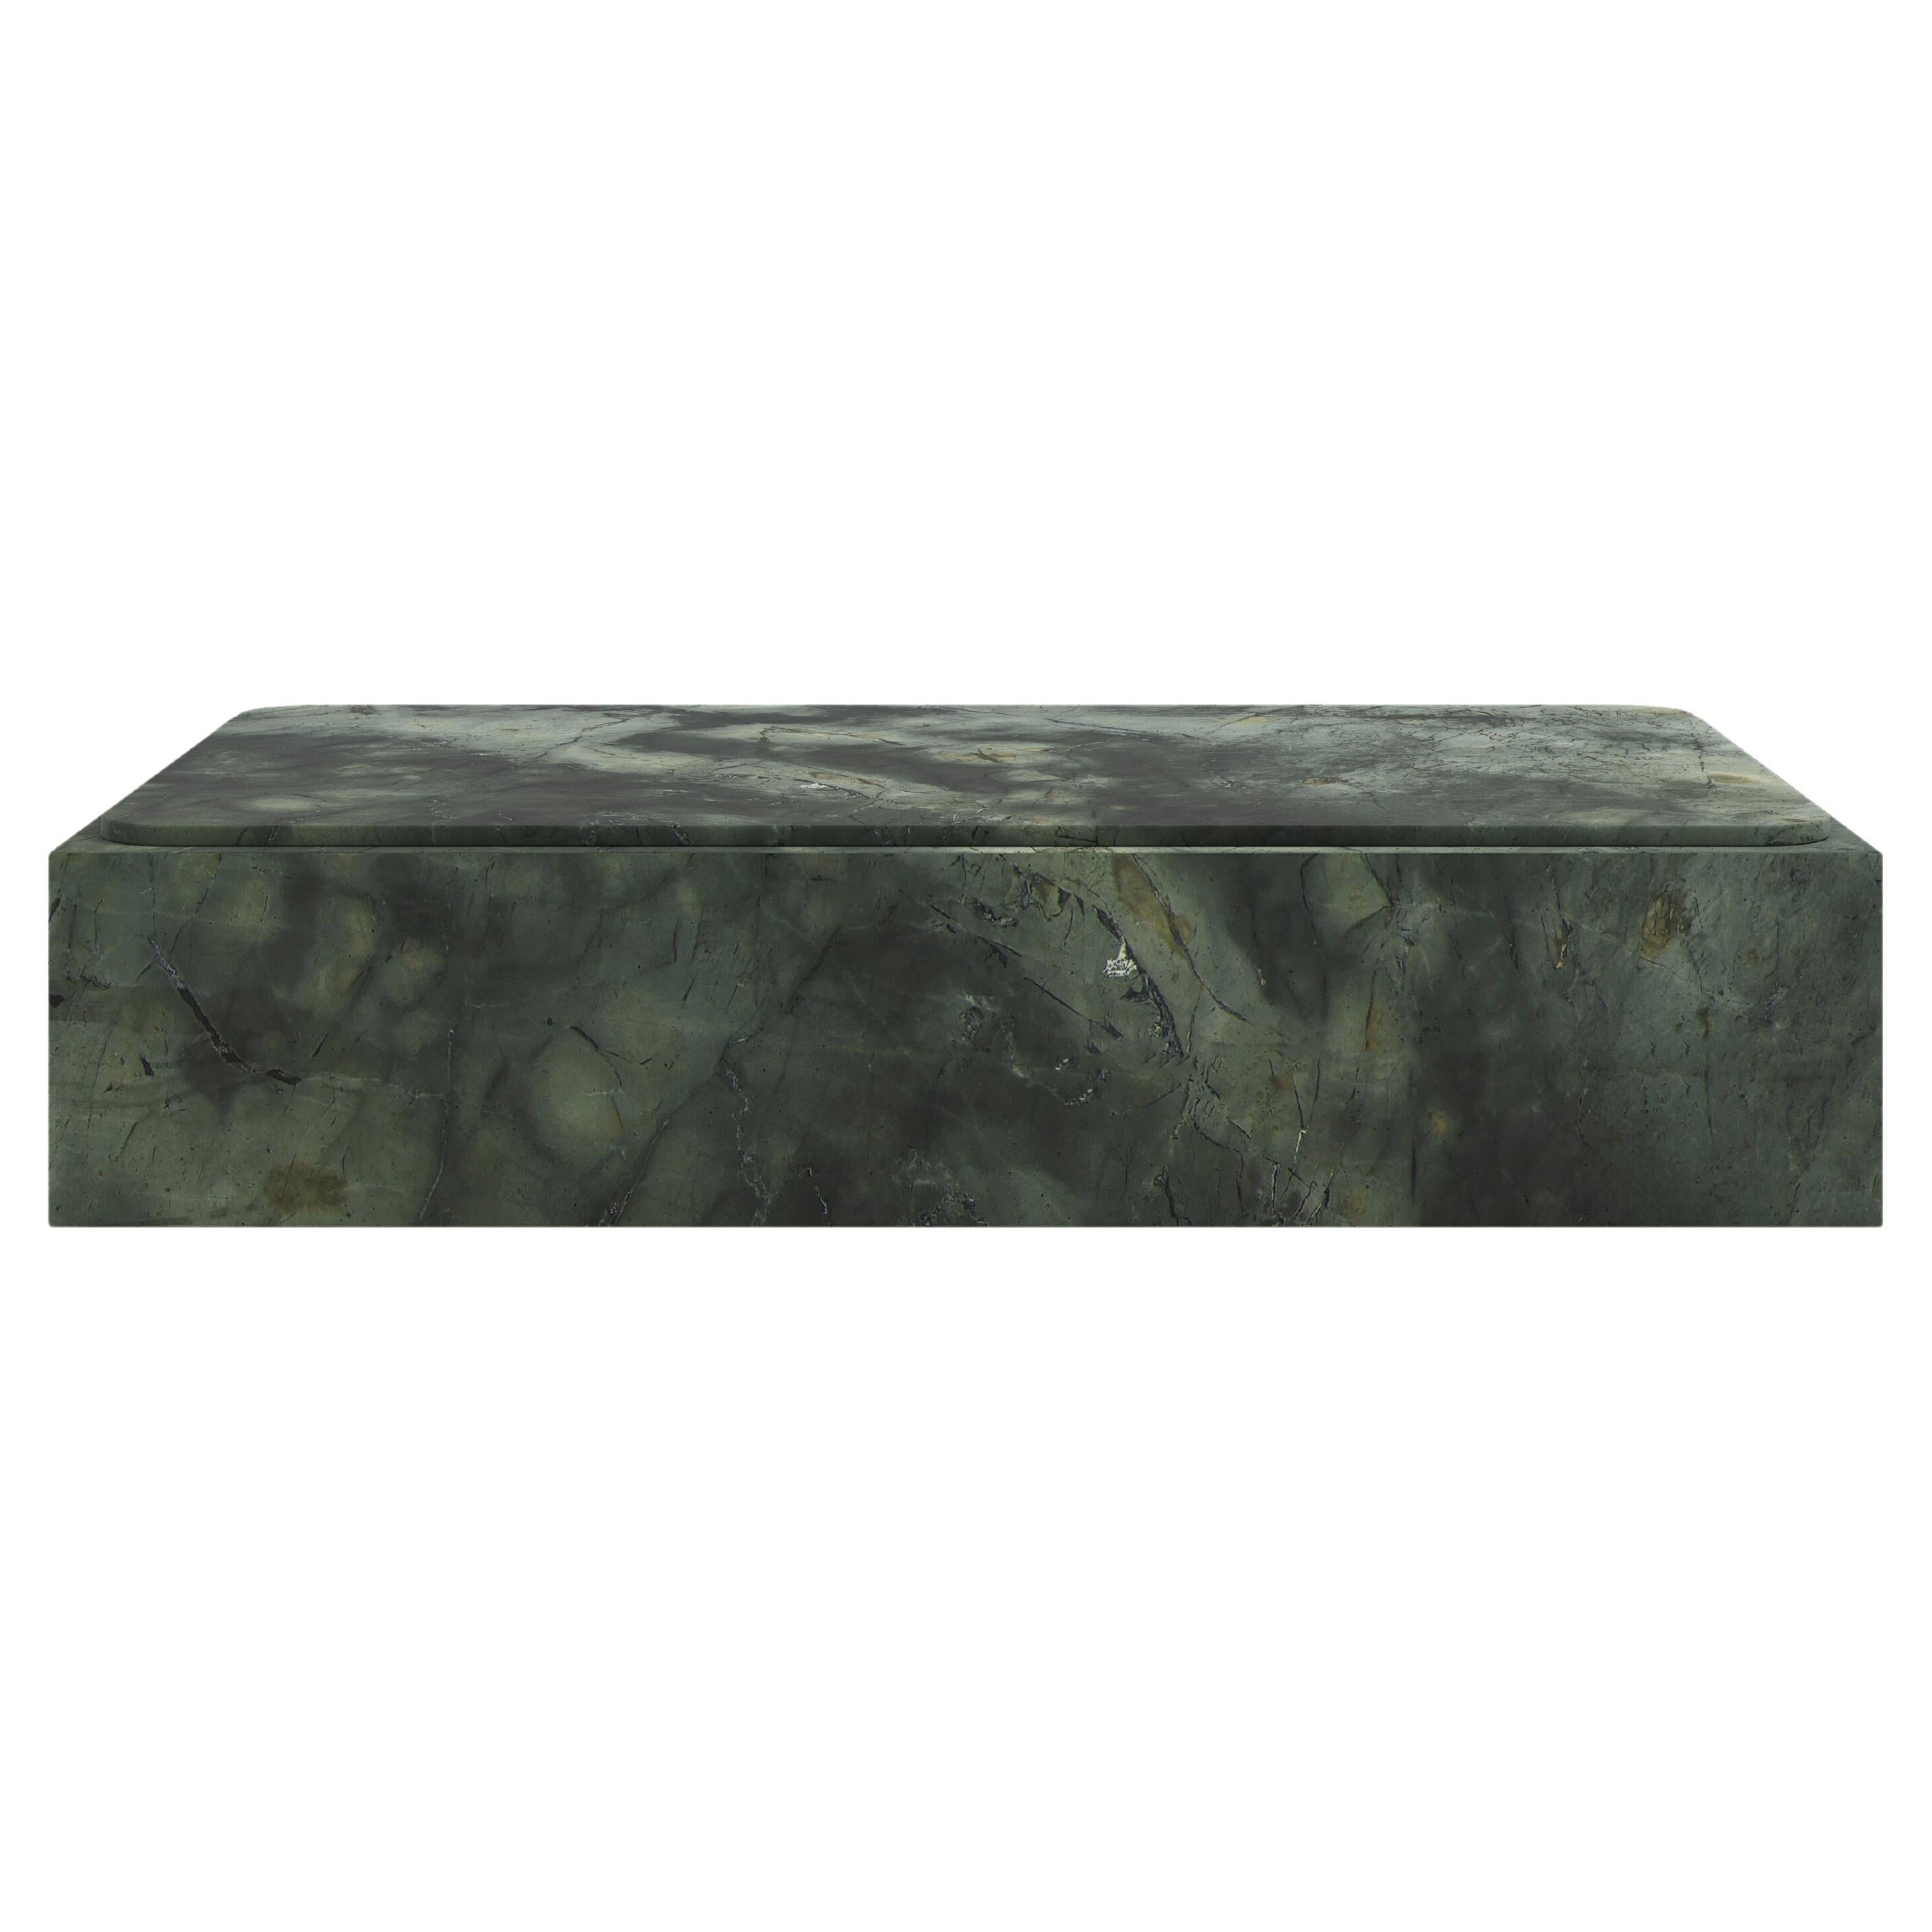 FORM(LA) Cubo Rectangle Plinth Coffee Table 60”L x 36”W x 13”H Edinburgh Marble For Sale